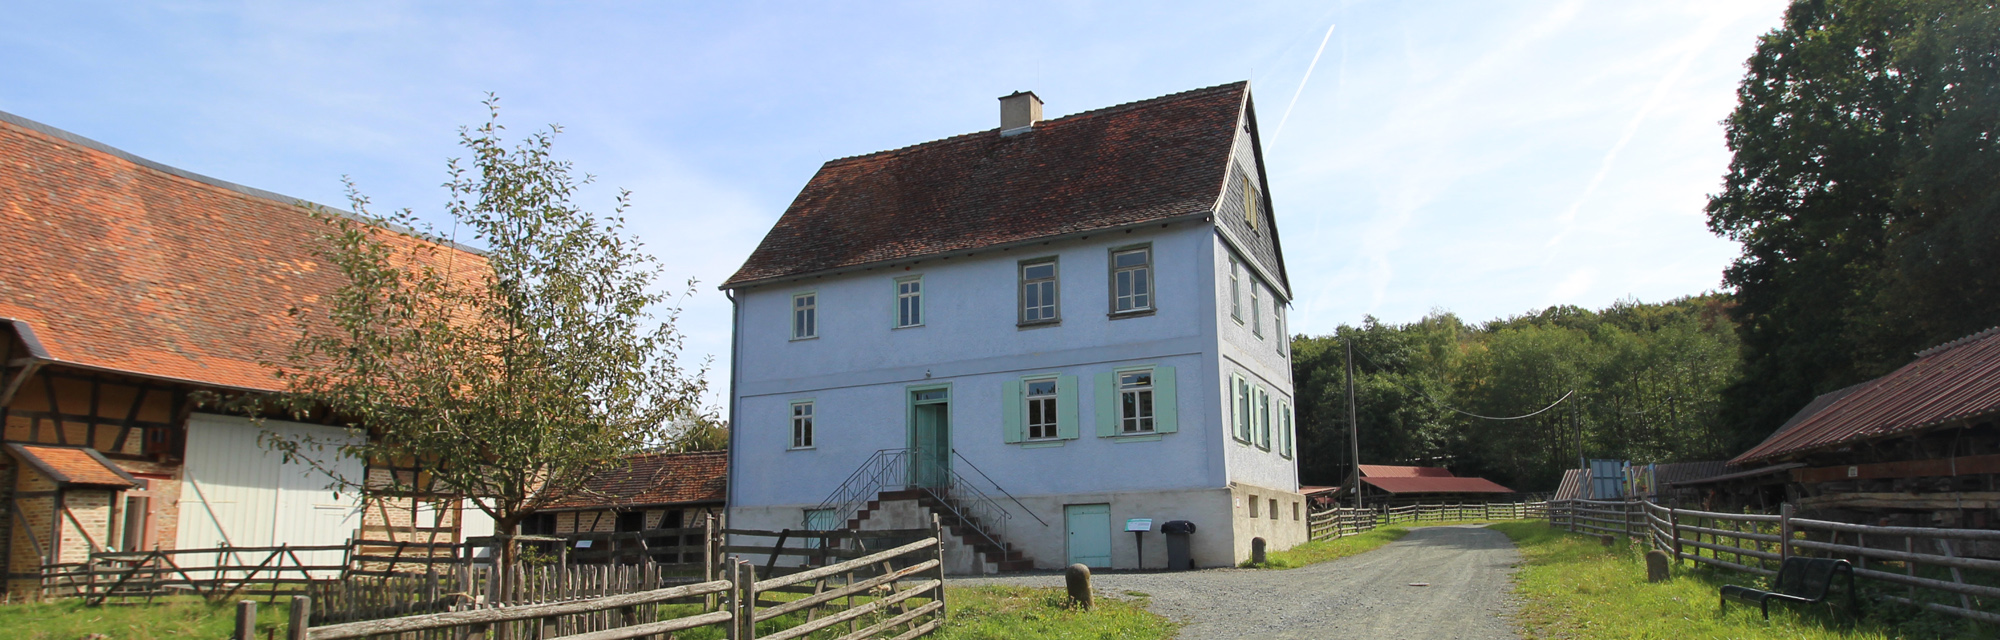 Haus aus Anspach (Taunushaus)